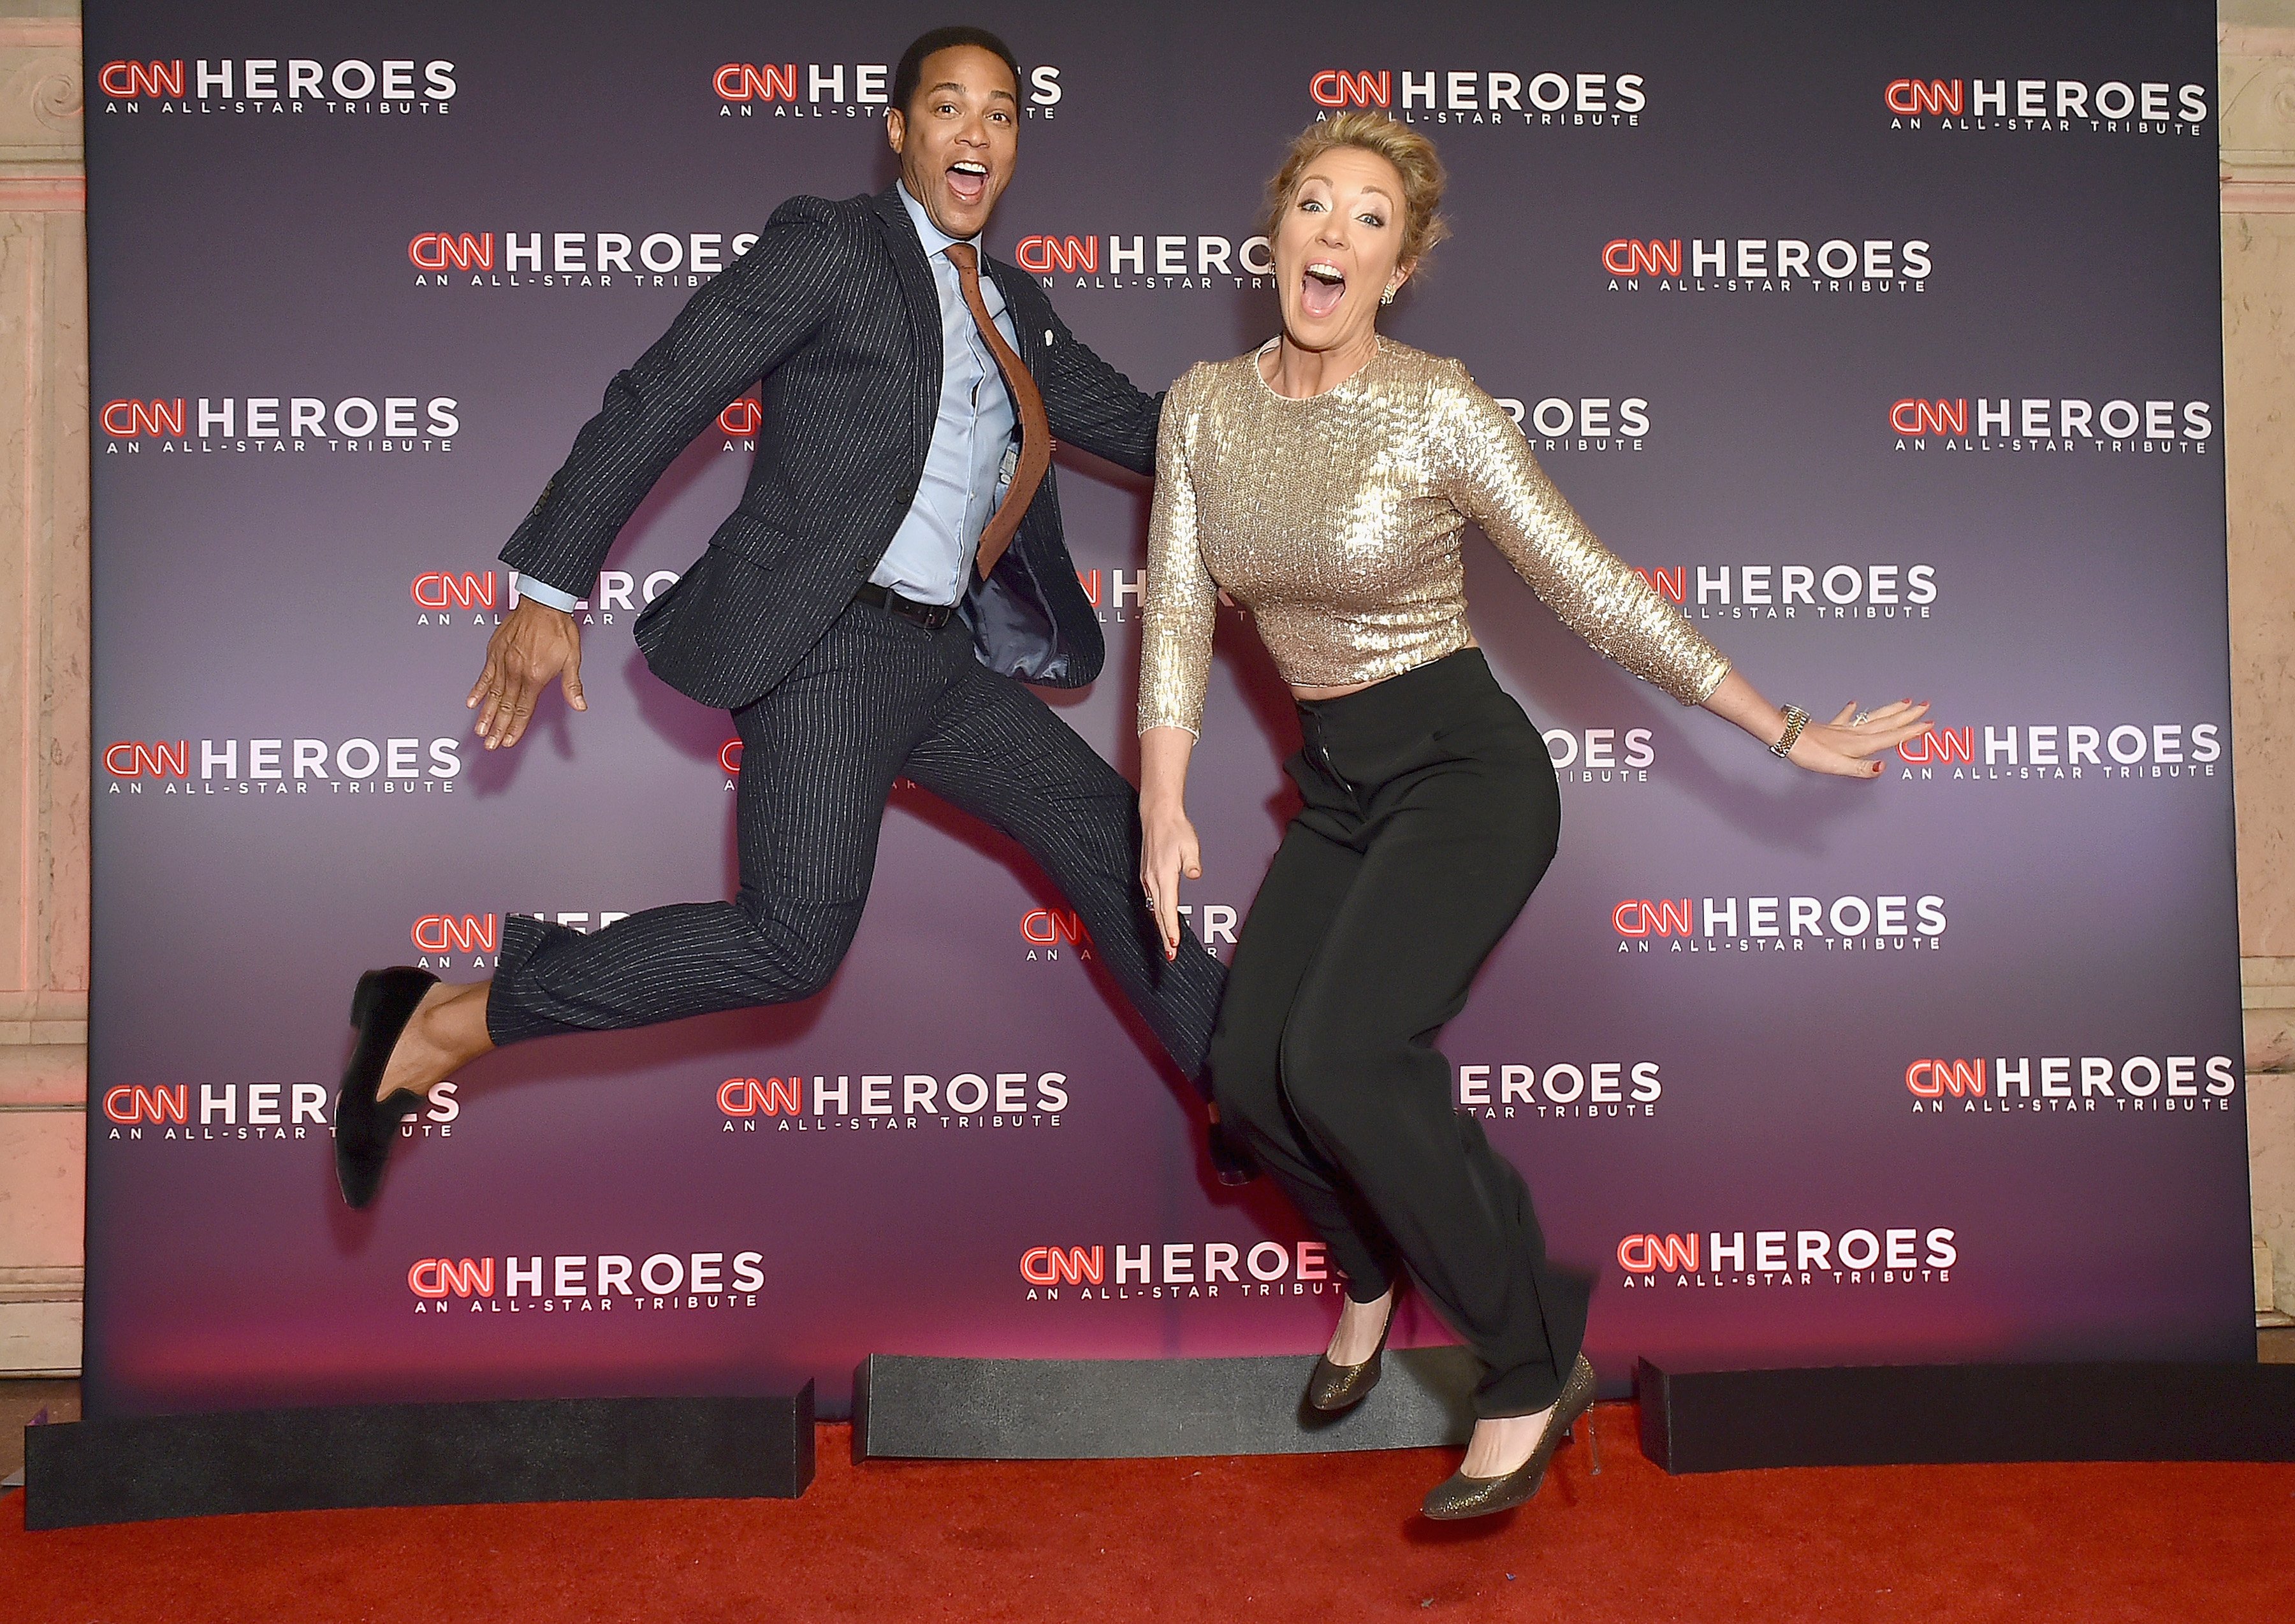  Don Lemon and Brooke Baldwin attend CNN Heroes